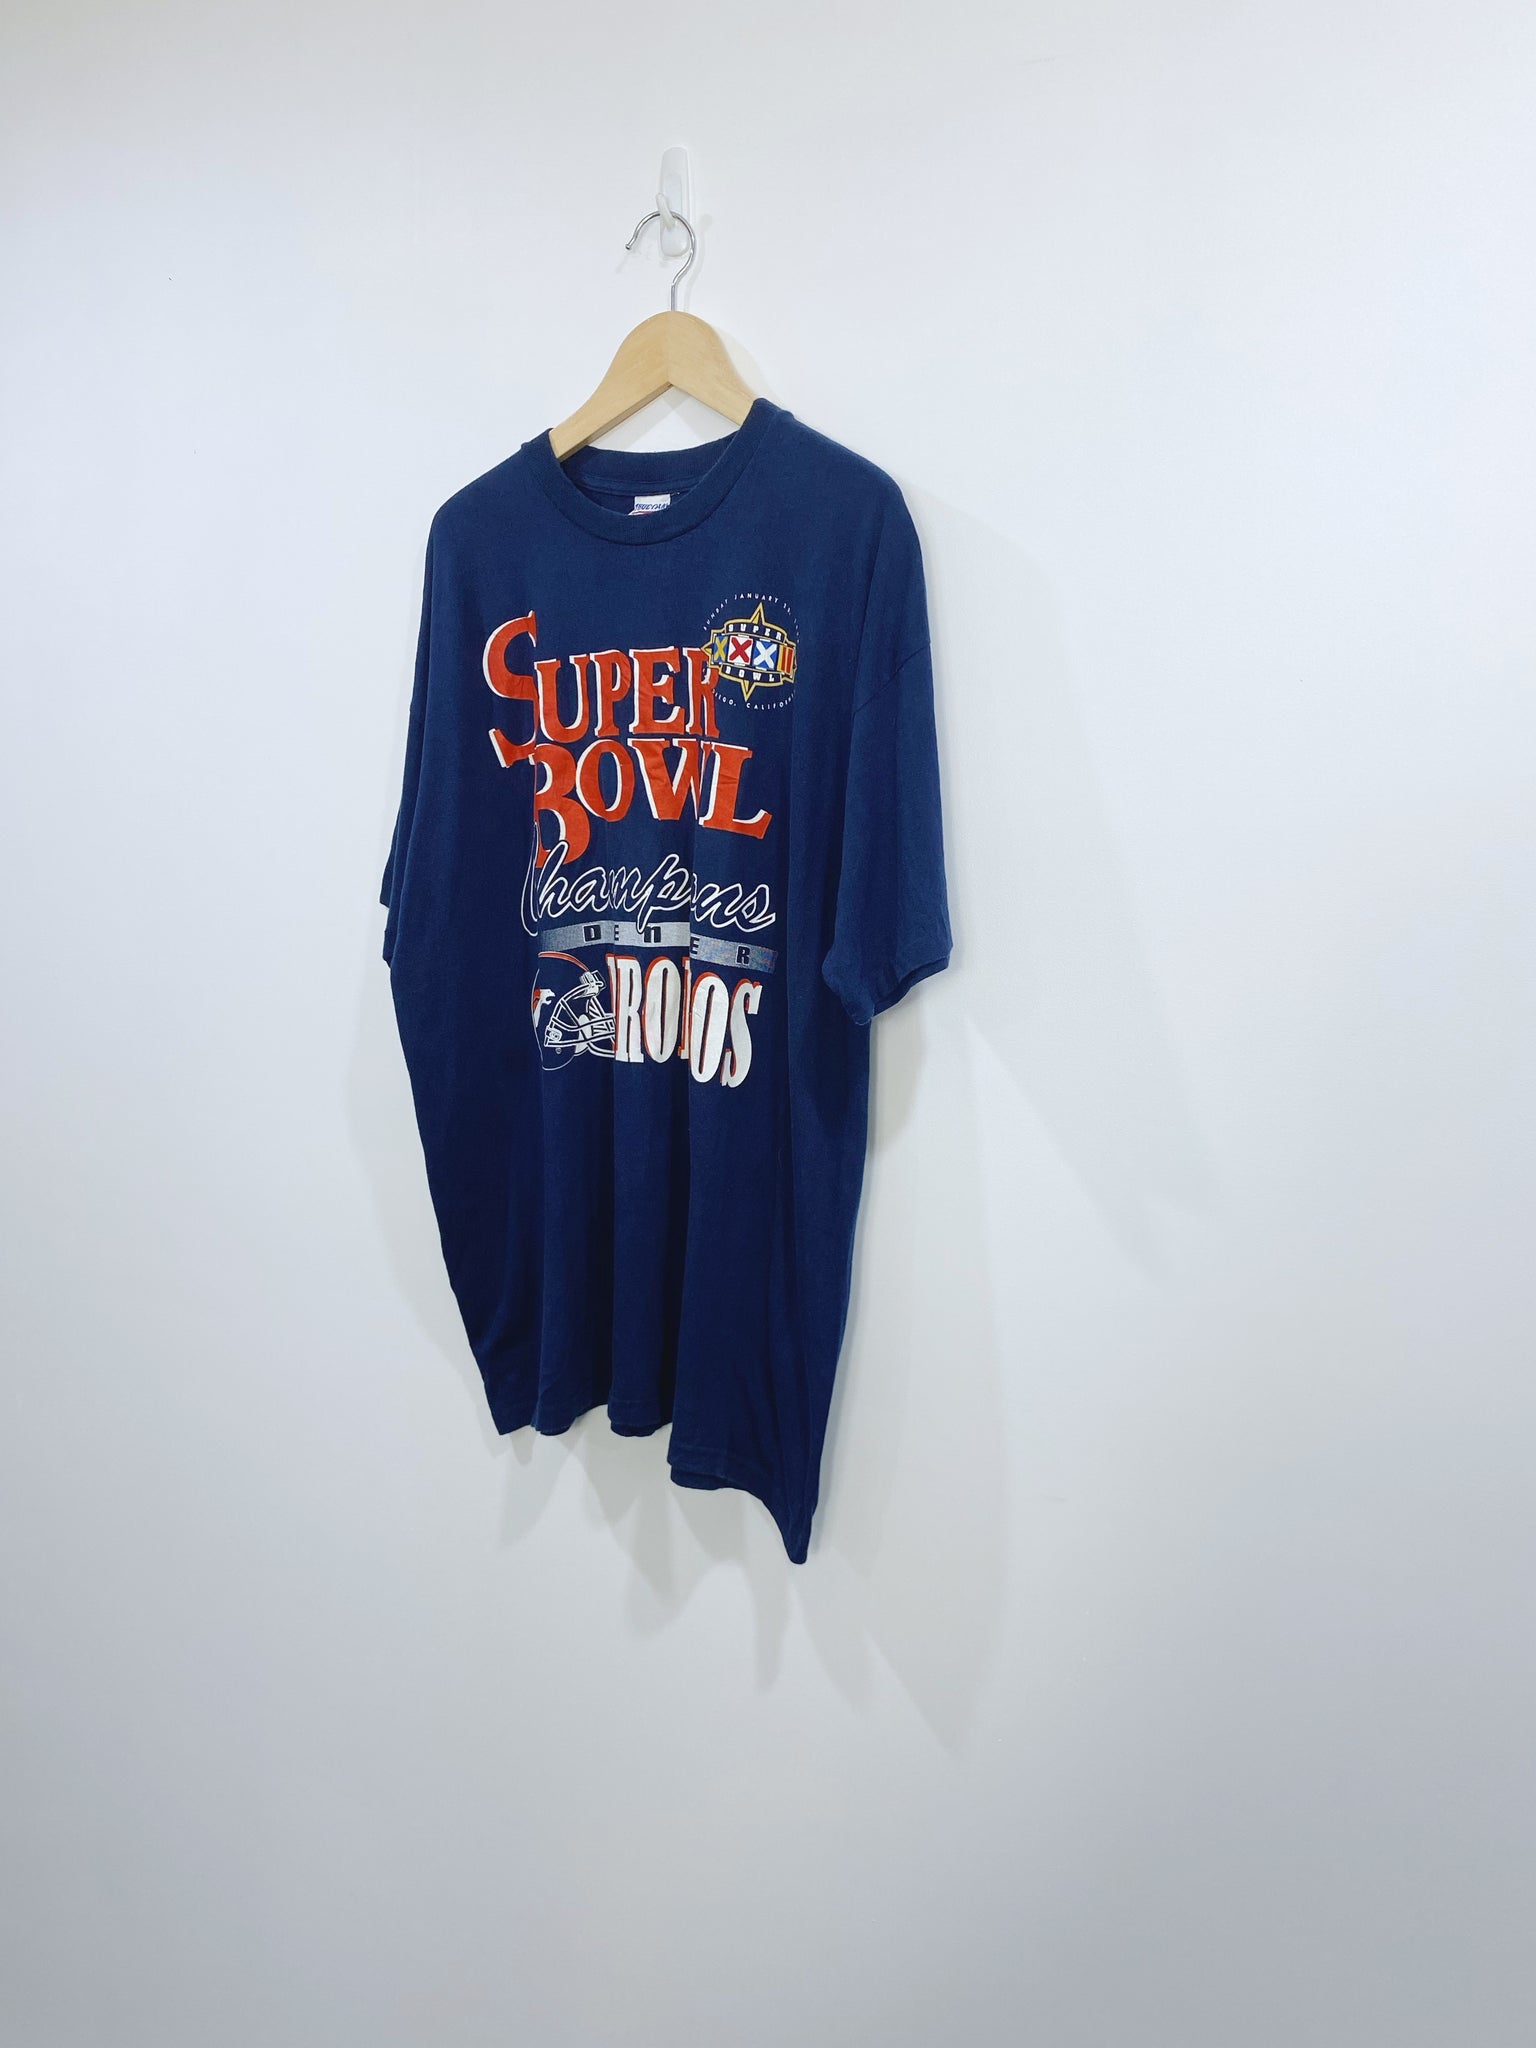 Vintage 1998 Denver Broncos Championship T-shirt XL